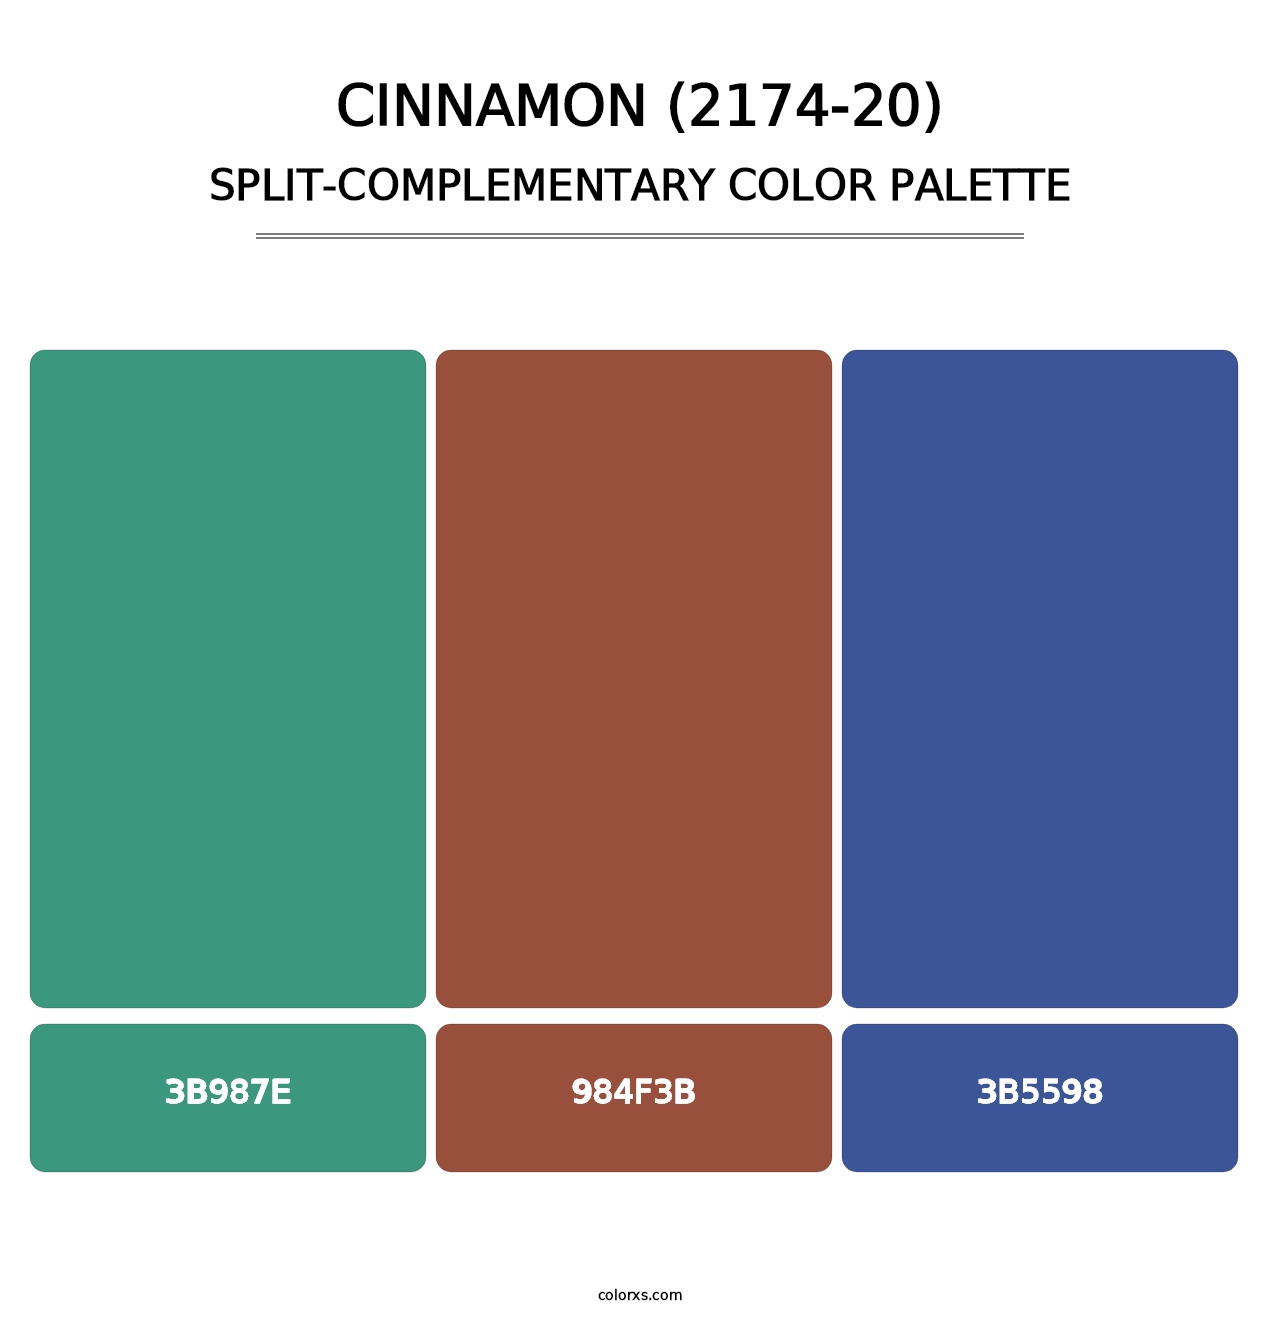 Cinnamon (2174-20) - Split-Complementary Color Palette